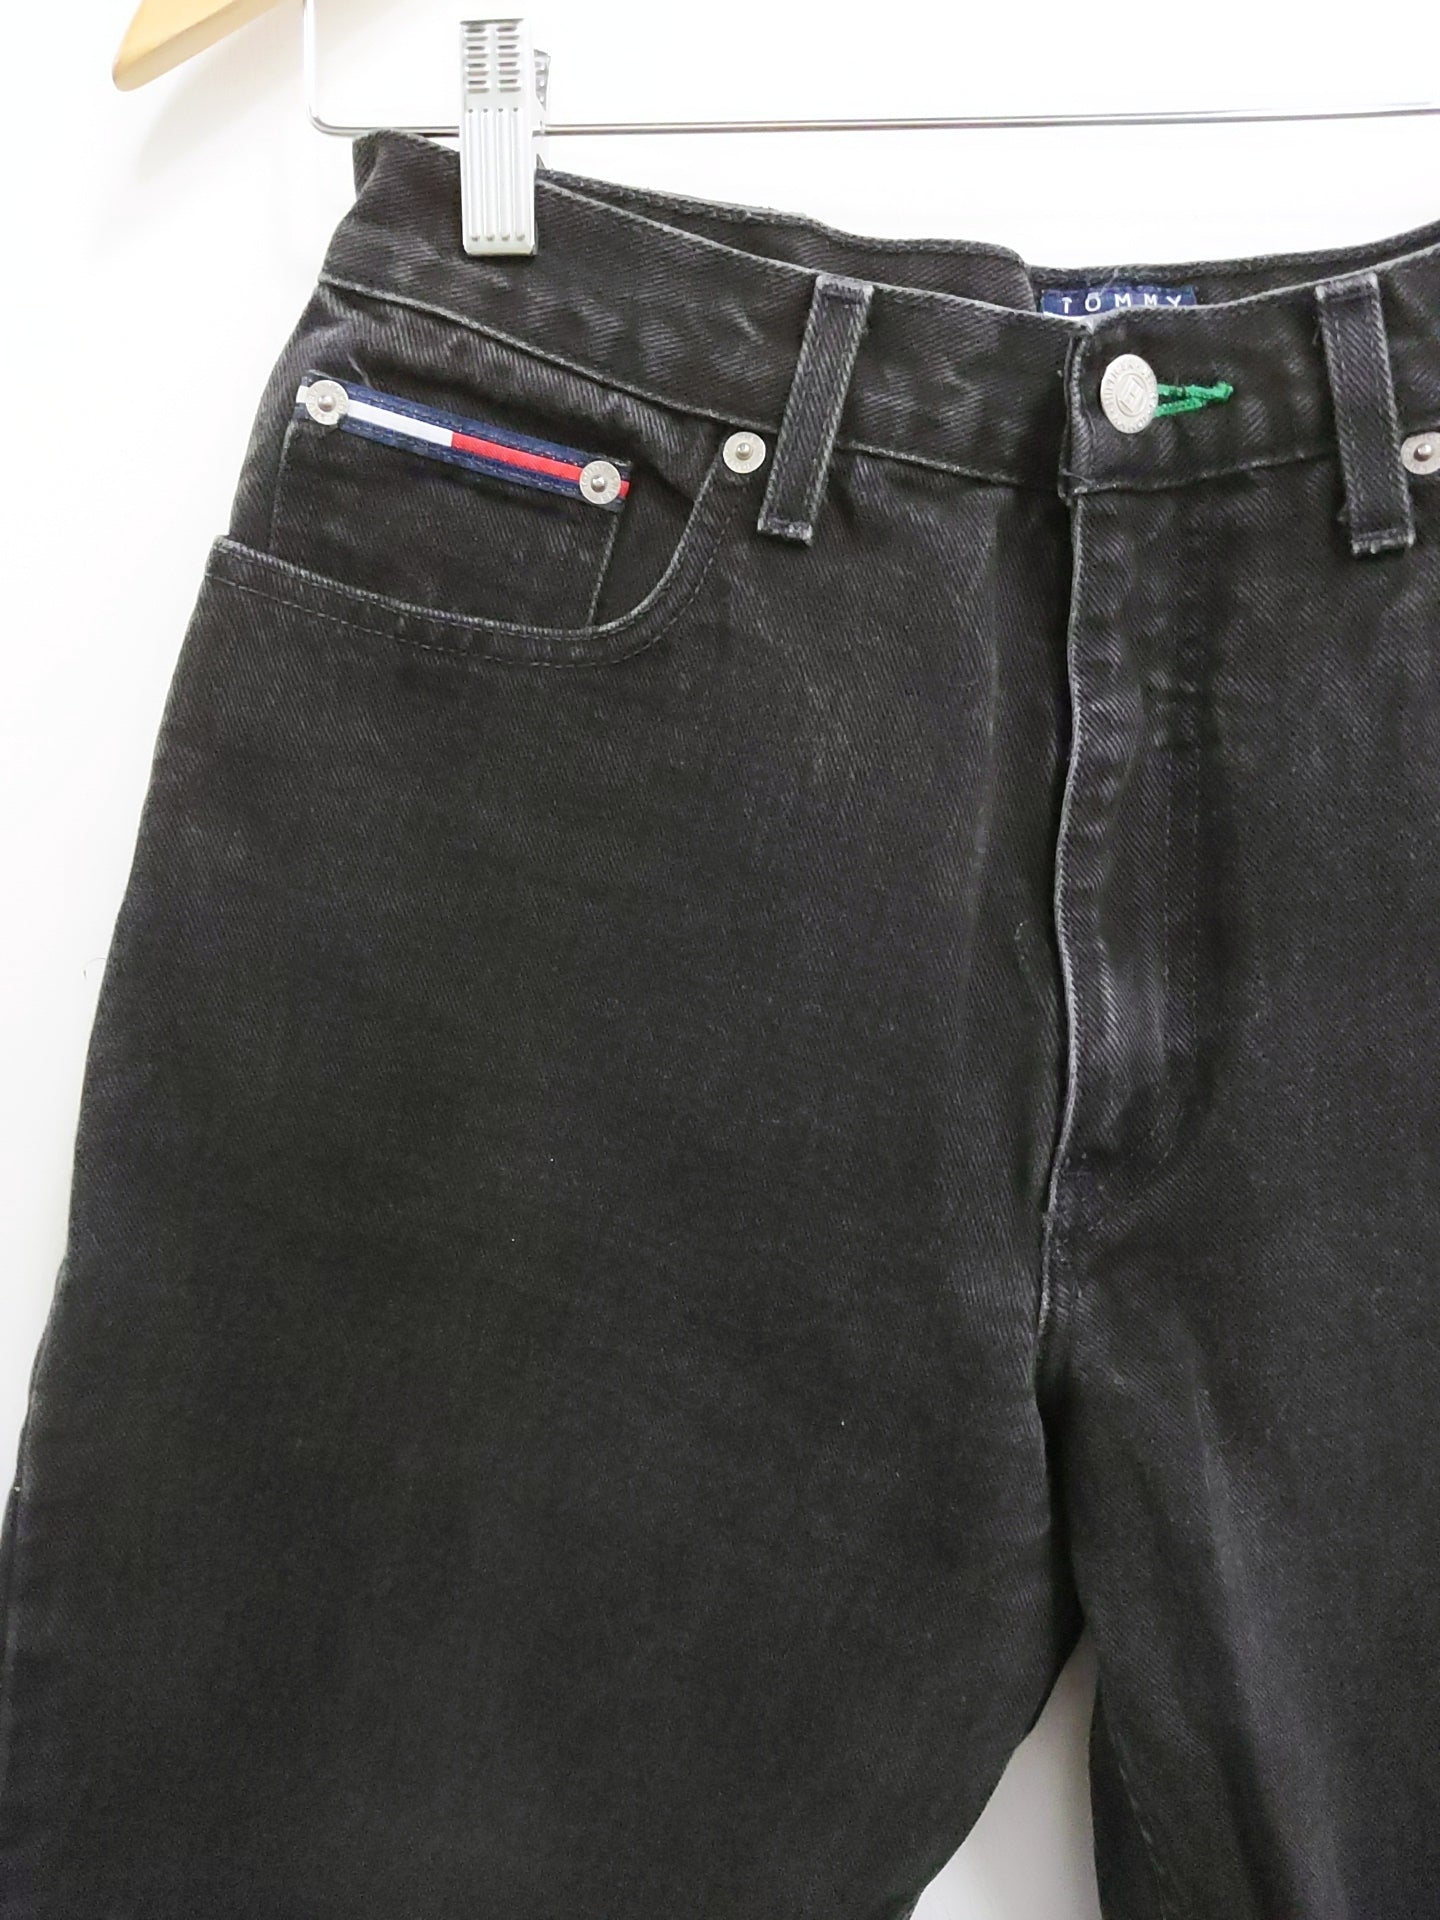 [M] Vintage Tommy Jeans High-Waist Cut-Offs